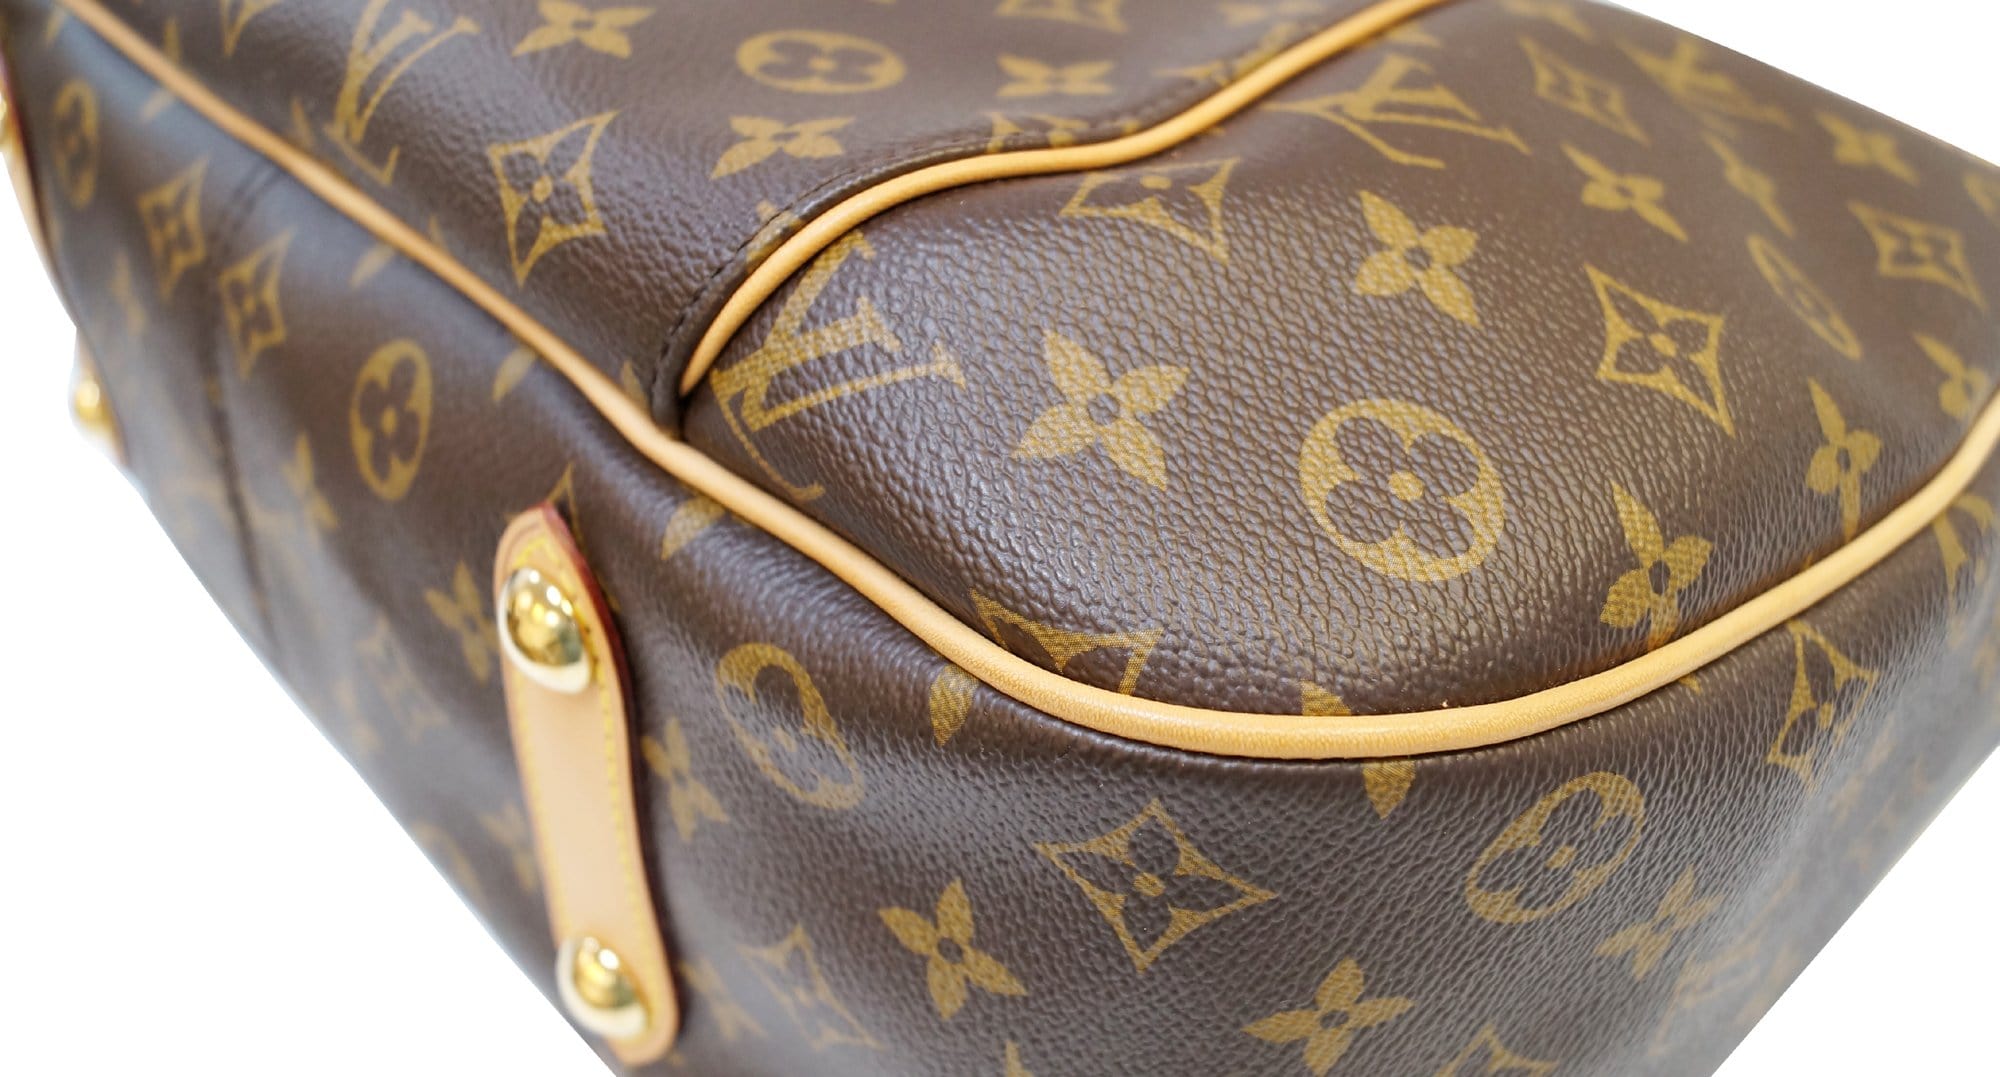 Galliera cloth handbag Louis Vuitton Brown in Cloth - 11434726